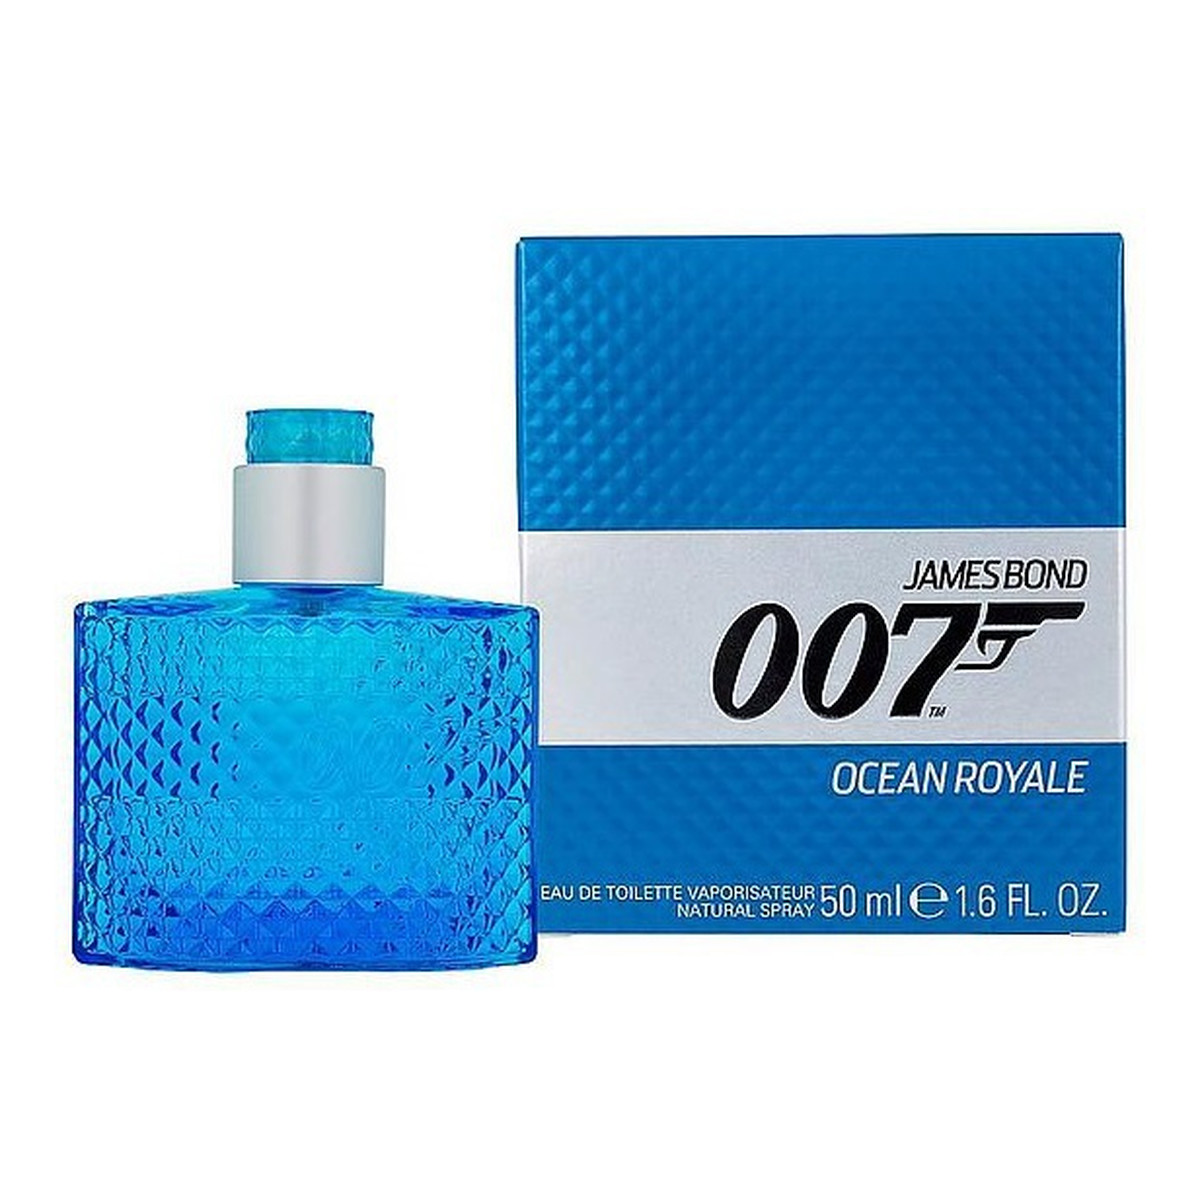 James Bond 007 Ocean Royale woda toaletowa 50ml